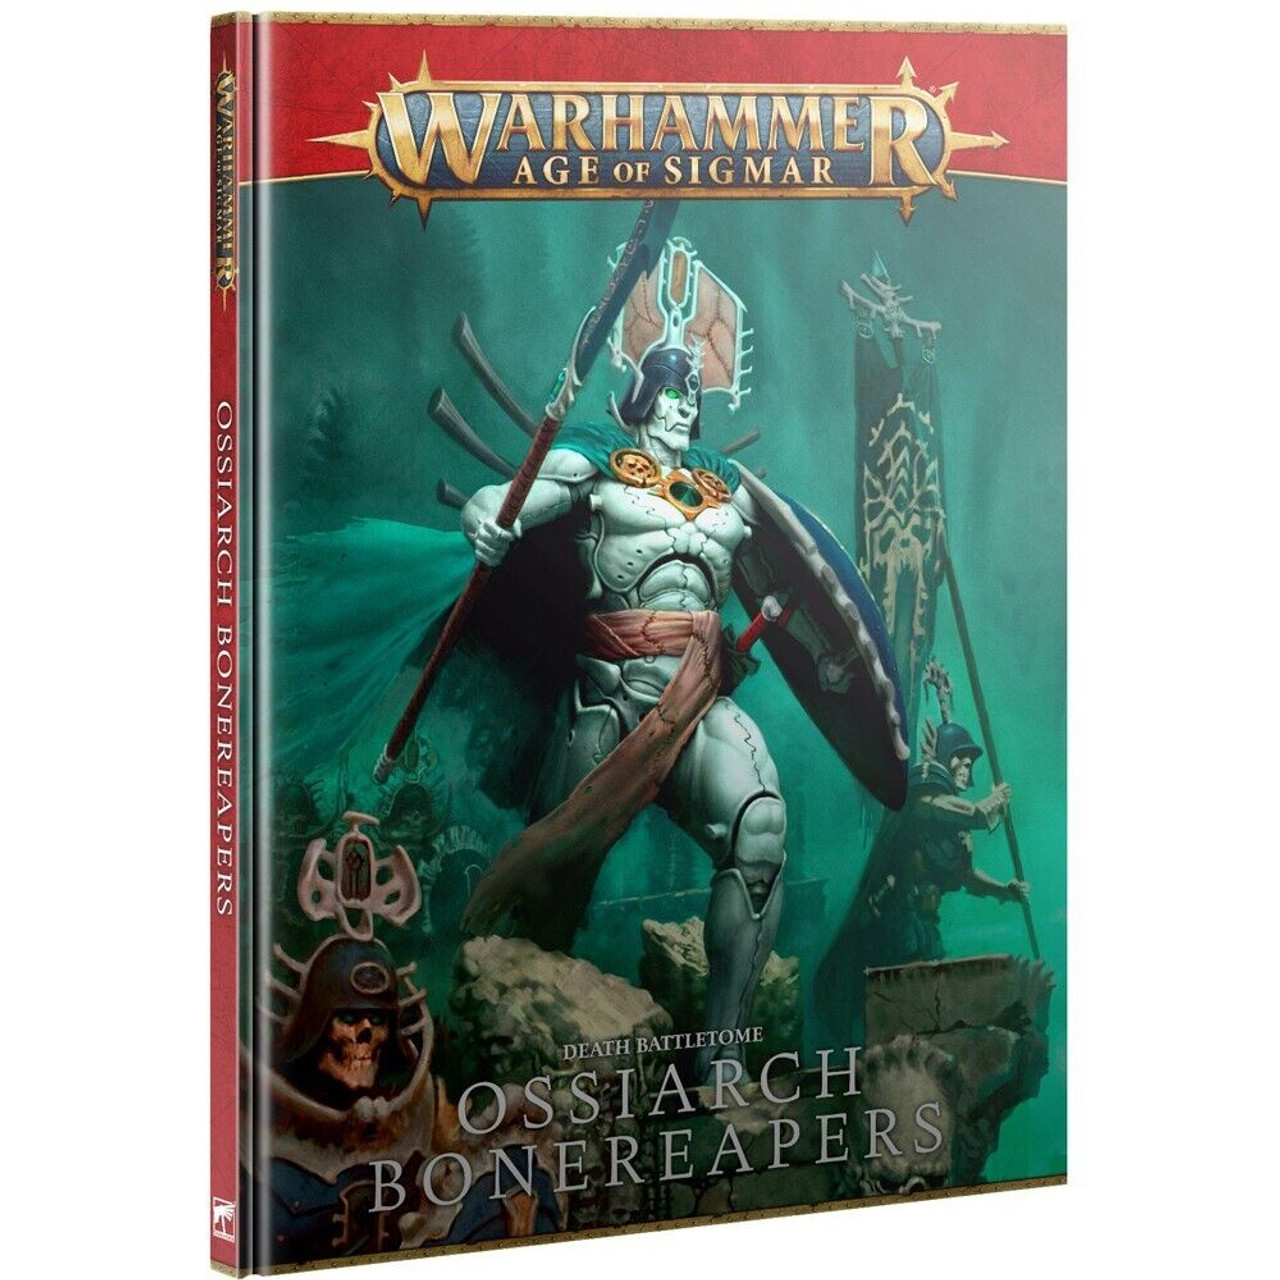 Warhammer Age of Sigmar: Death Battletome - Ossiarch Bonereapers